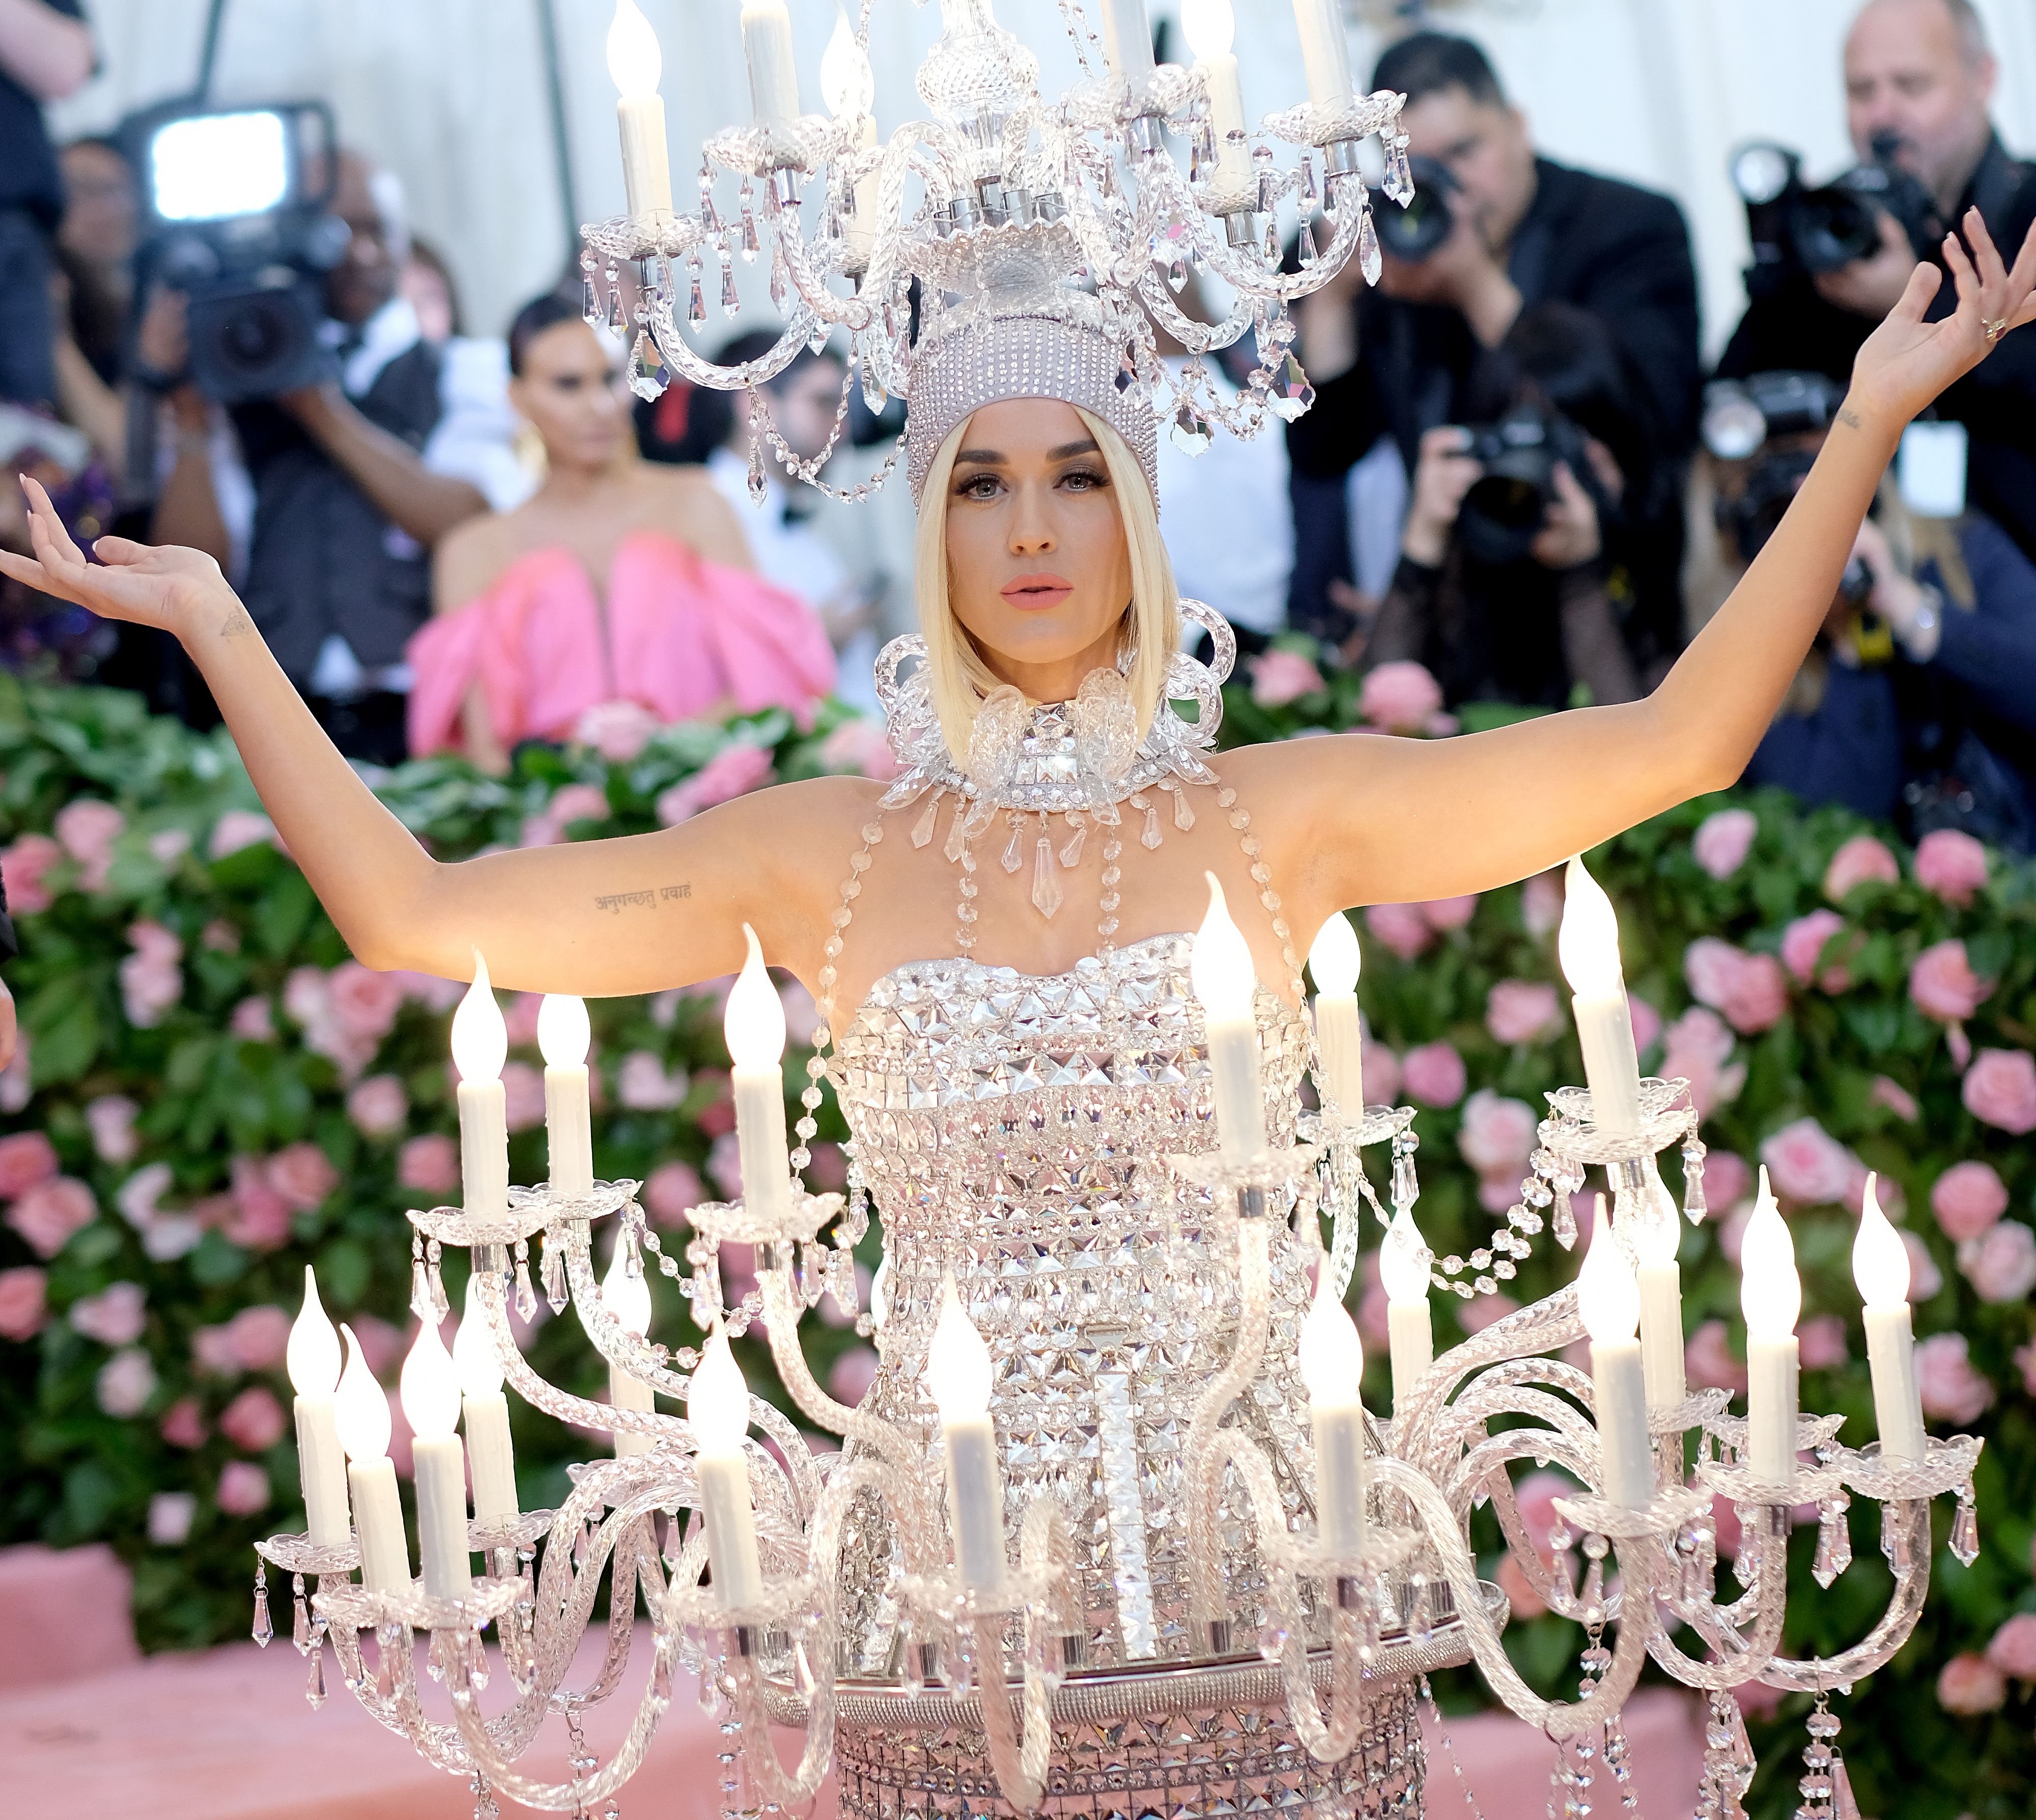 Katy Perry dressed like a chandelier